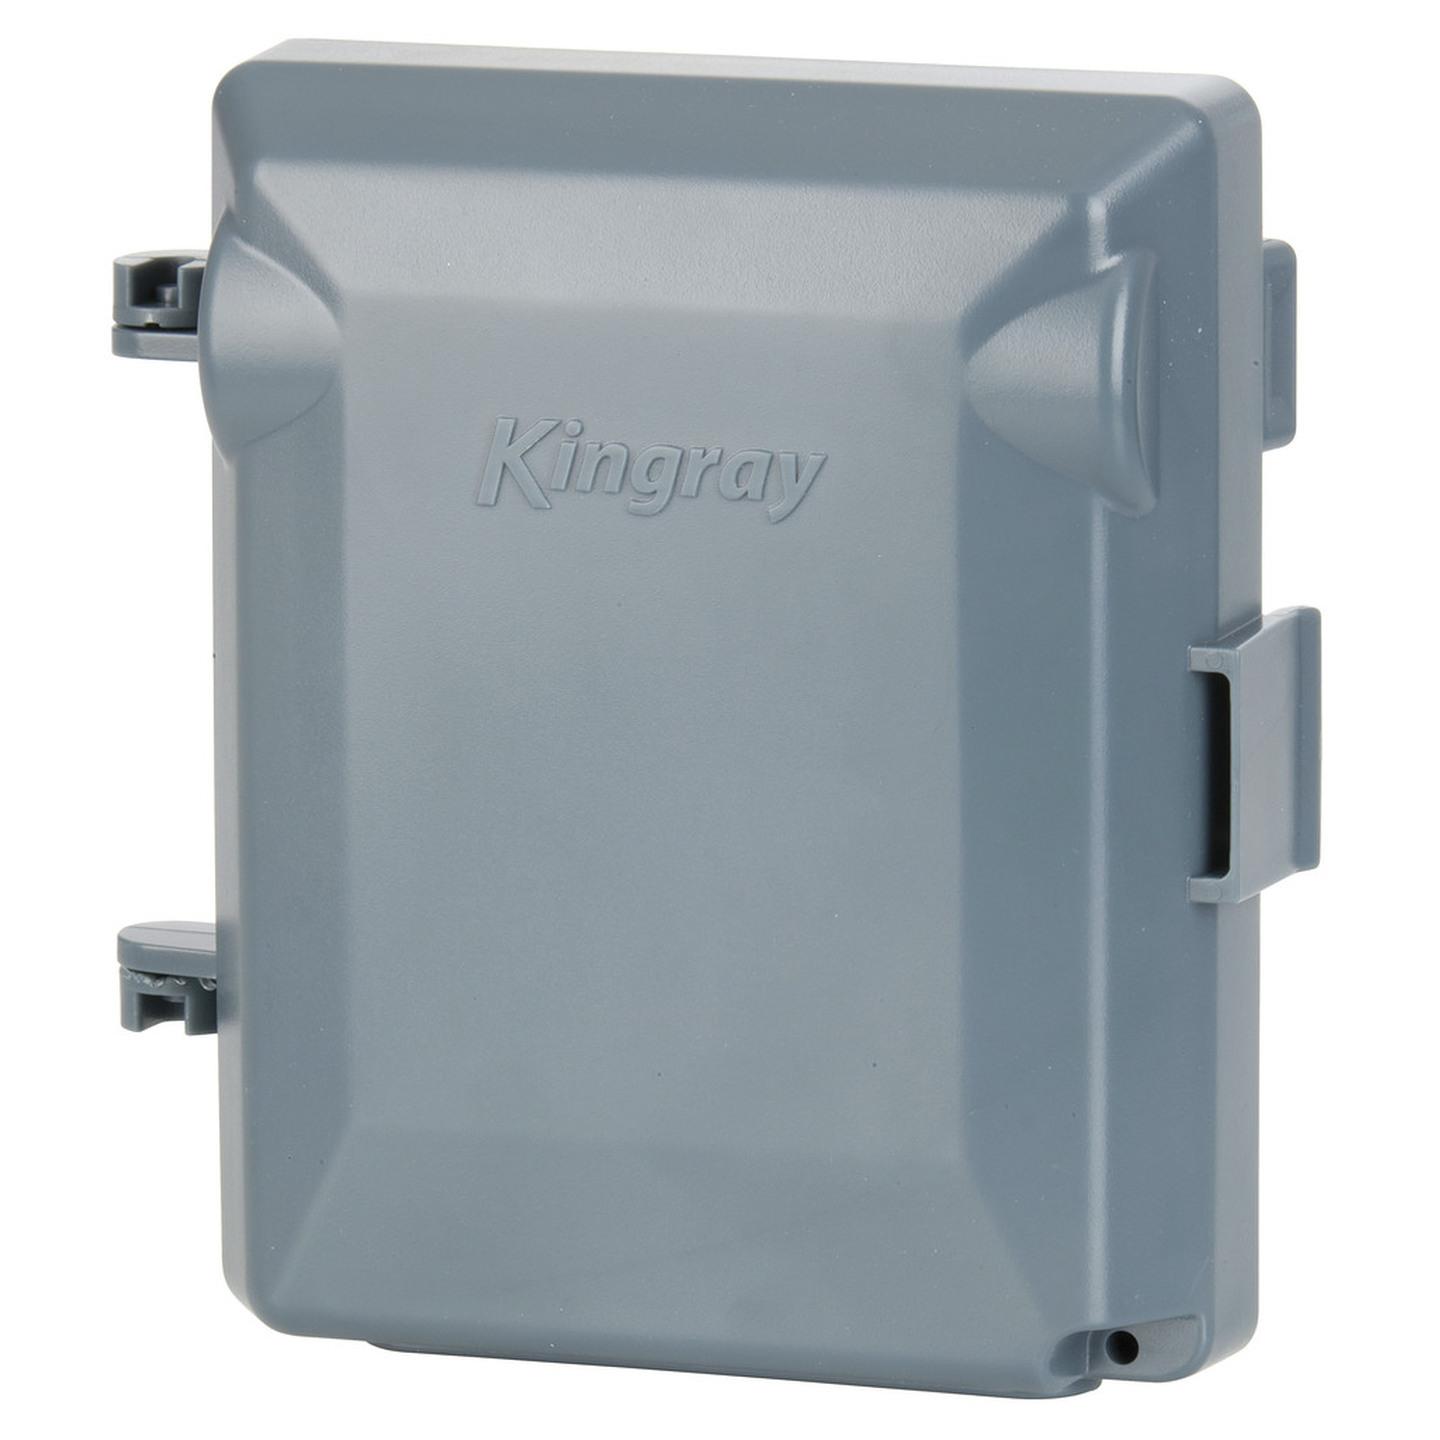 Kingray VHF/UHF Masthead Amp with LTE/4G Filters